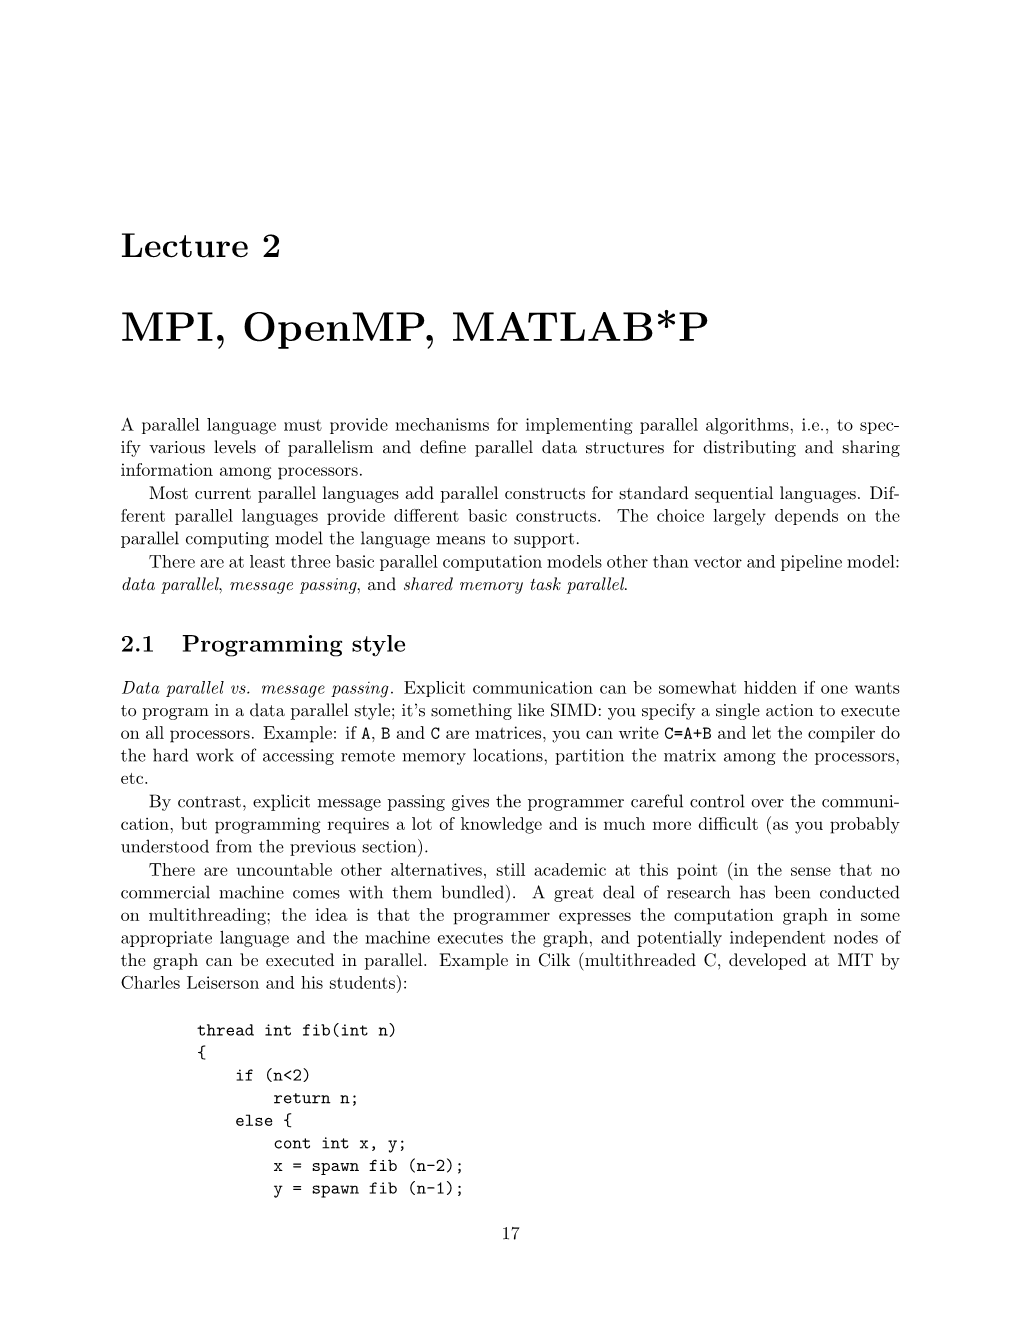 MPI, Openmp, MATLAB*P